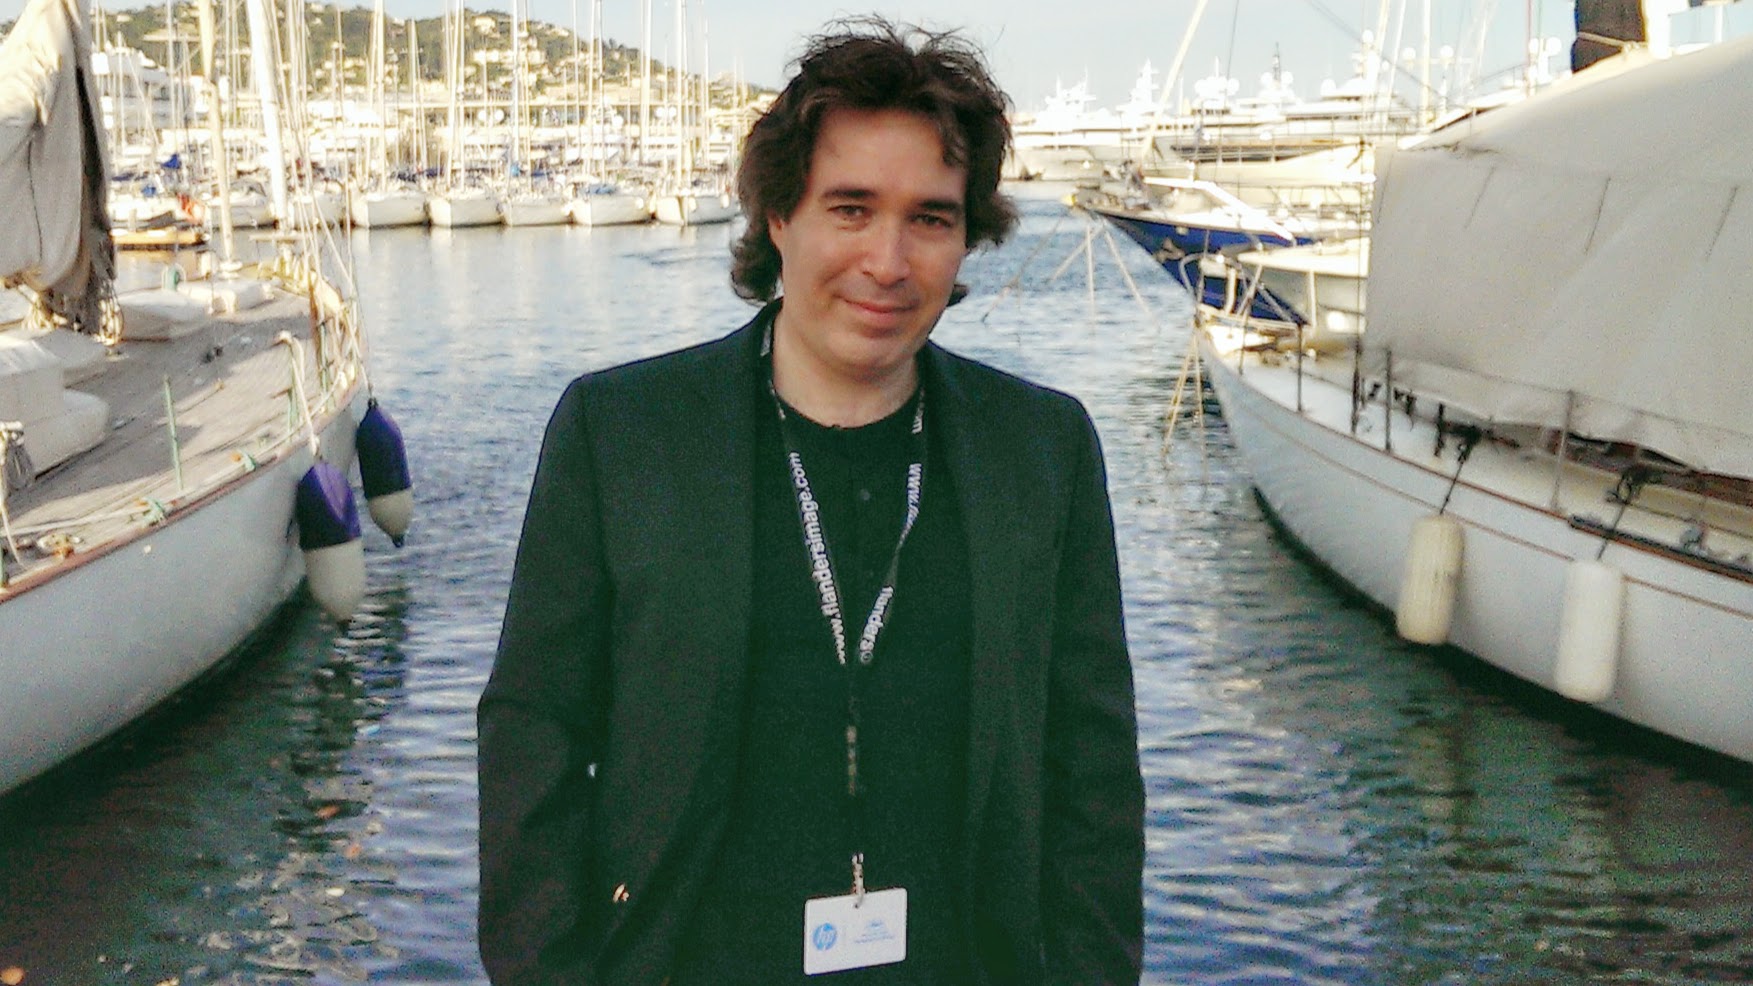 David Christopher Loya Cannes Harbor - May 2014